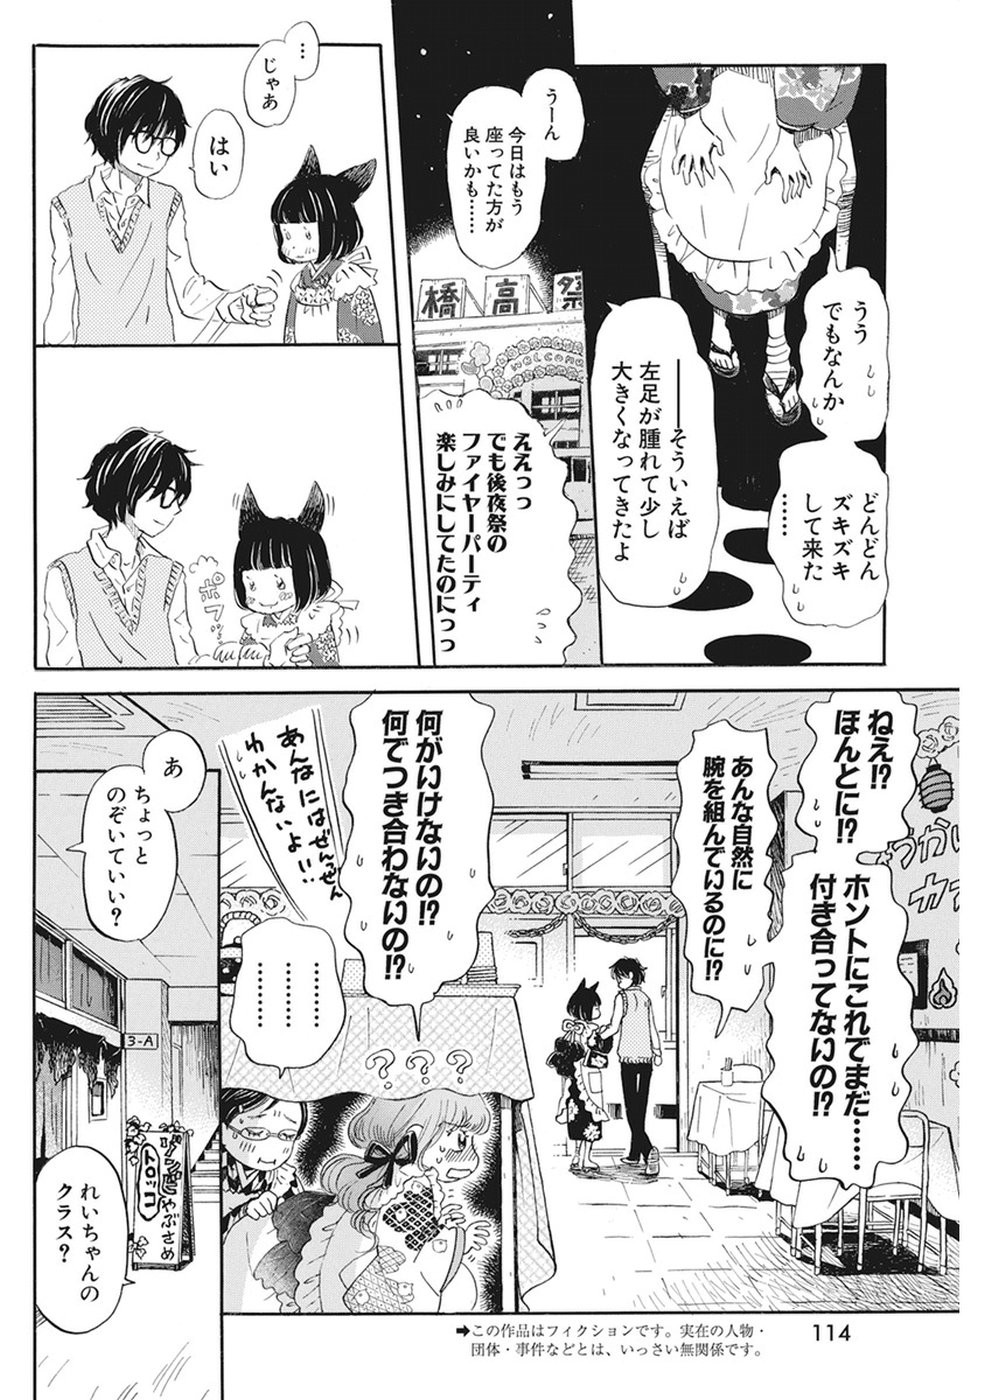 3 Gatsu no Lion - Chapter 154 - Page 3